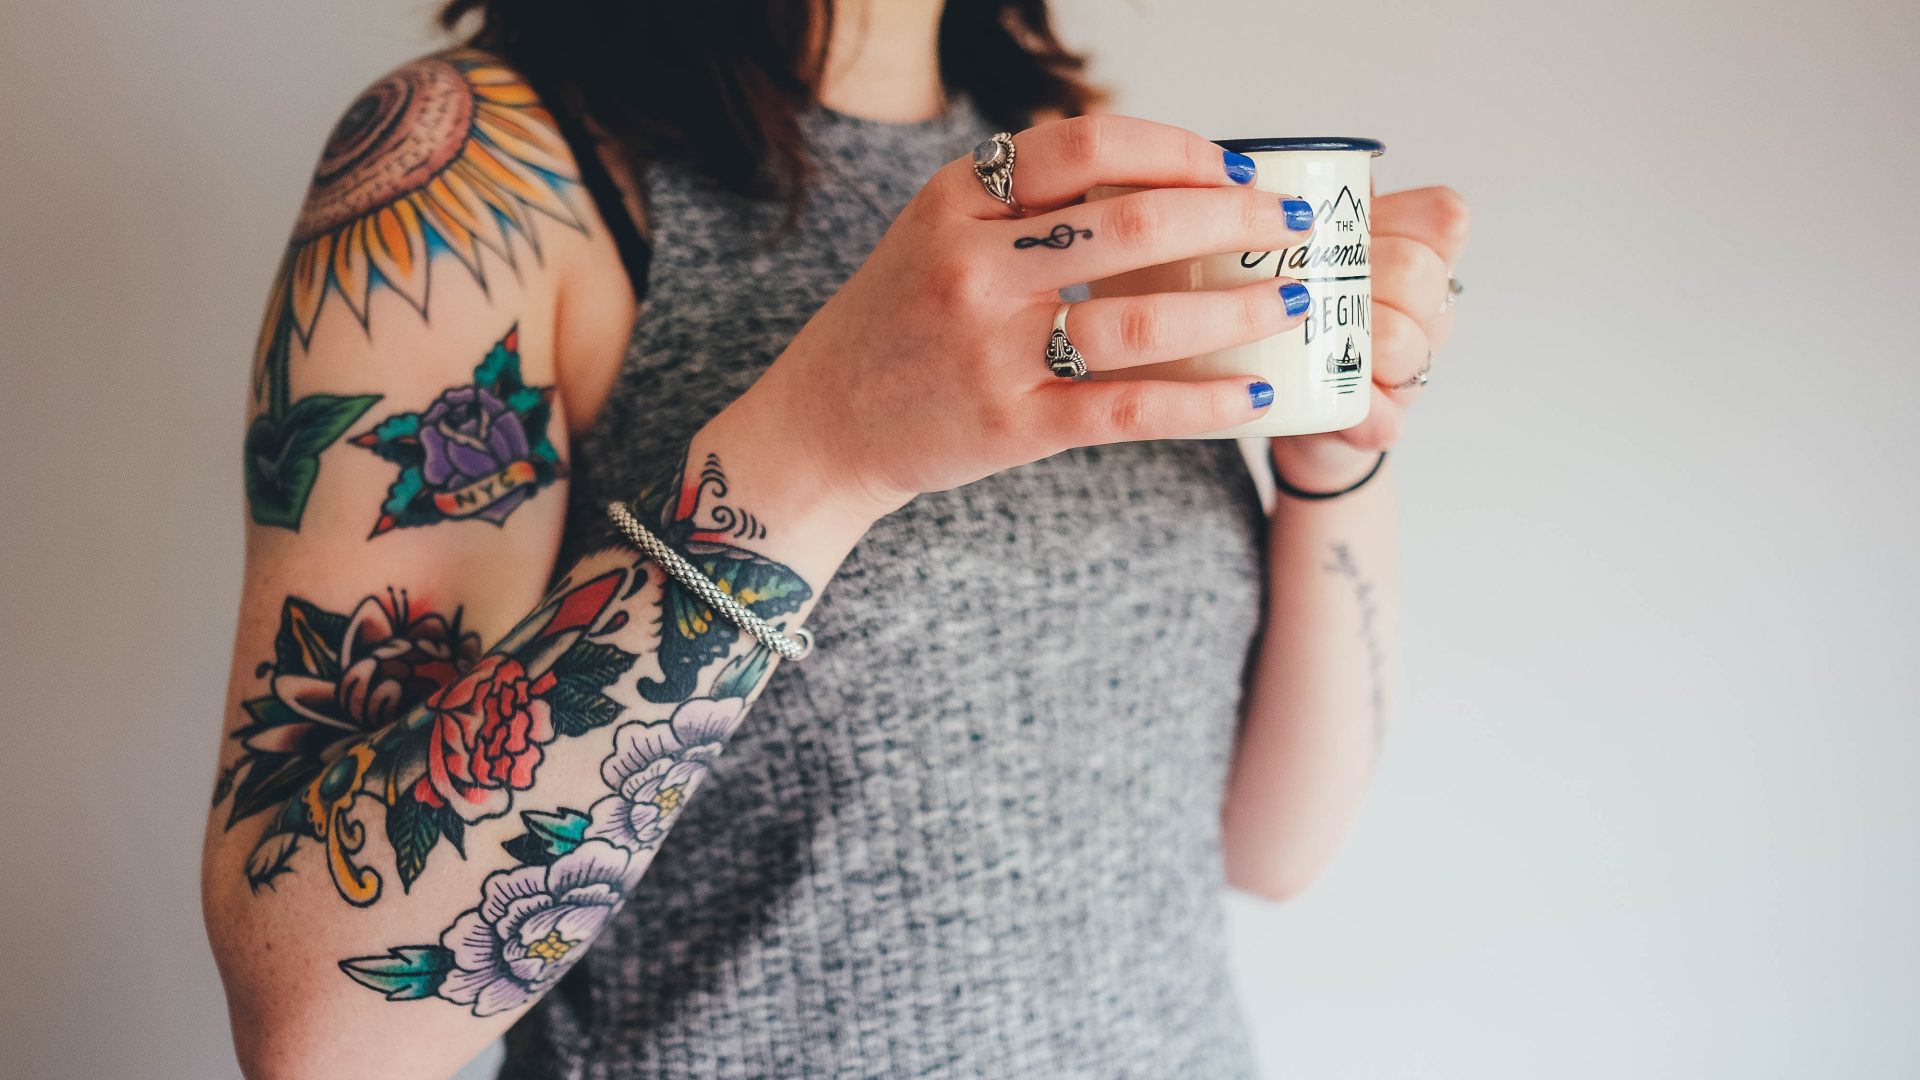 Tattooed lady holding a mug